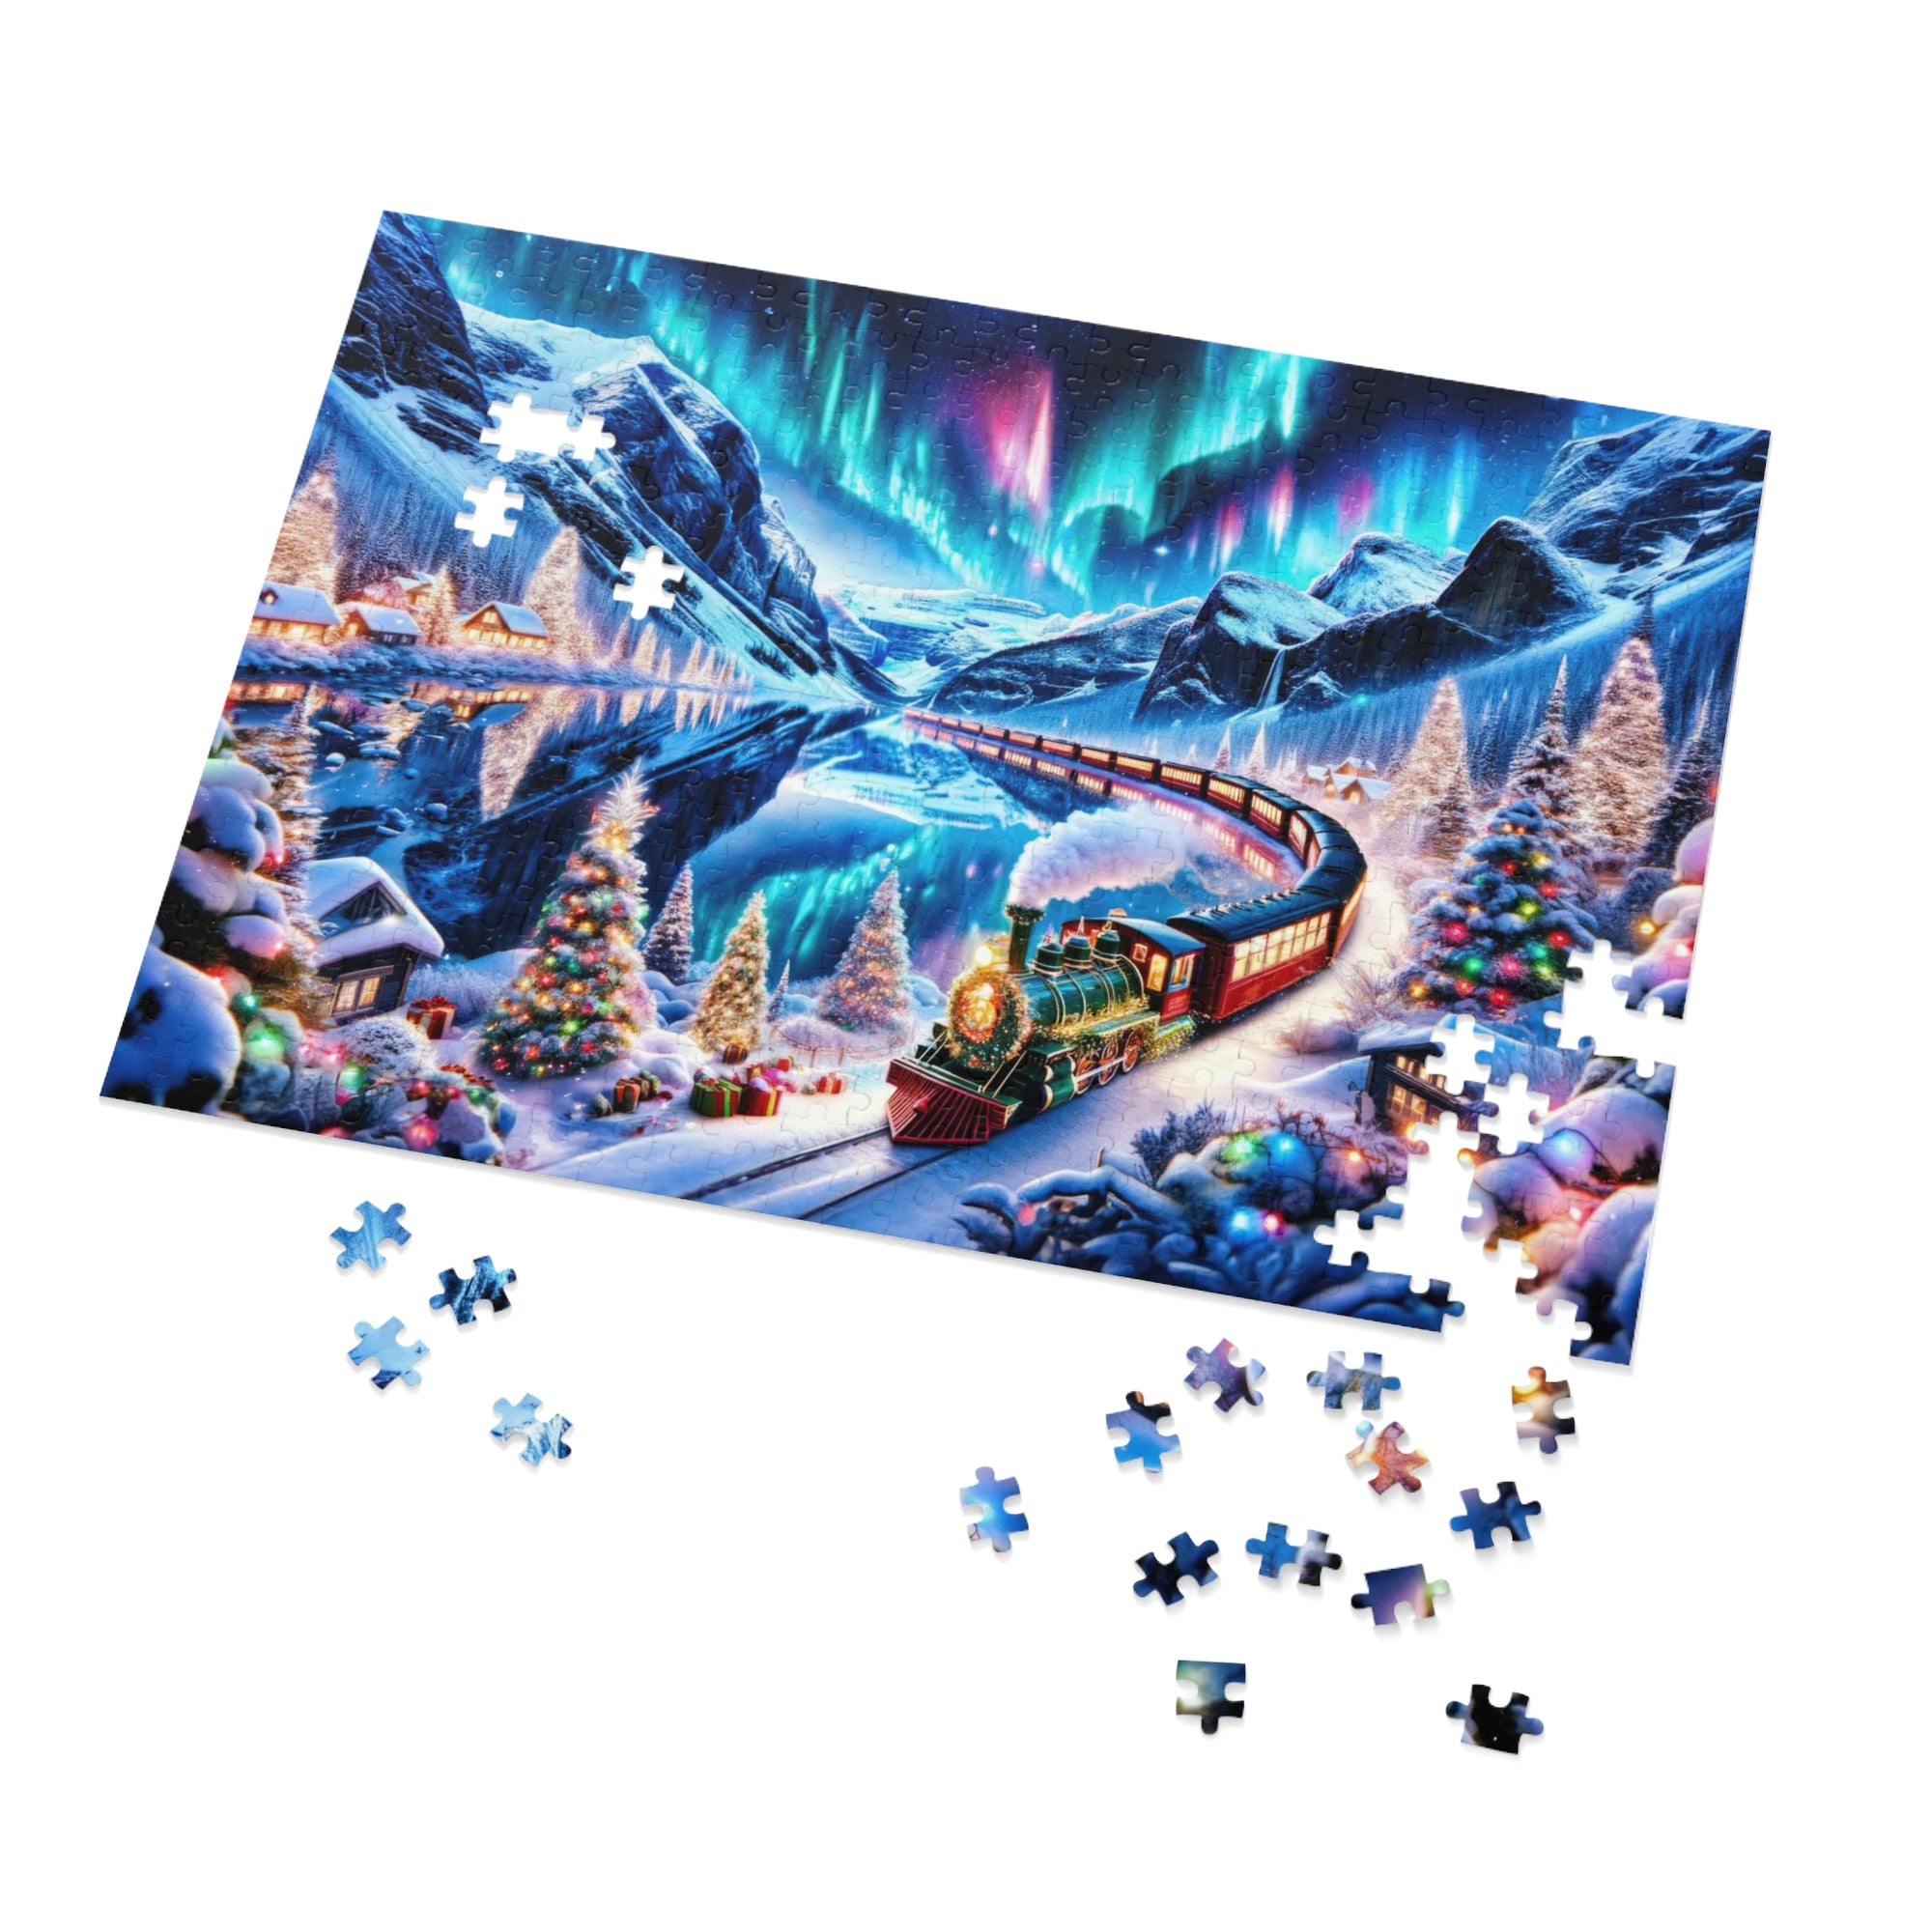 Winter Wonderland Express Jigsaw Puzzle